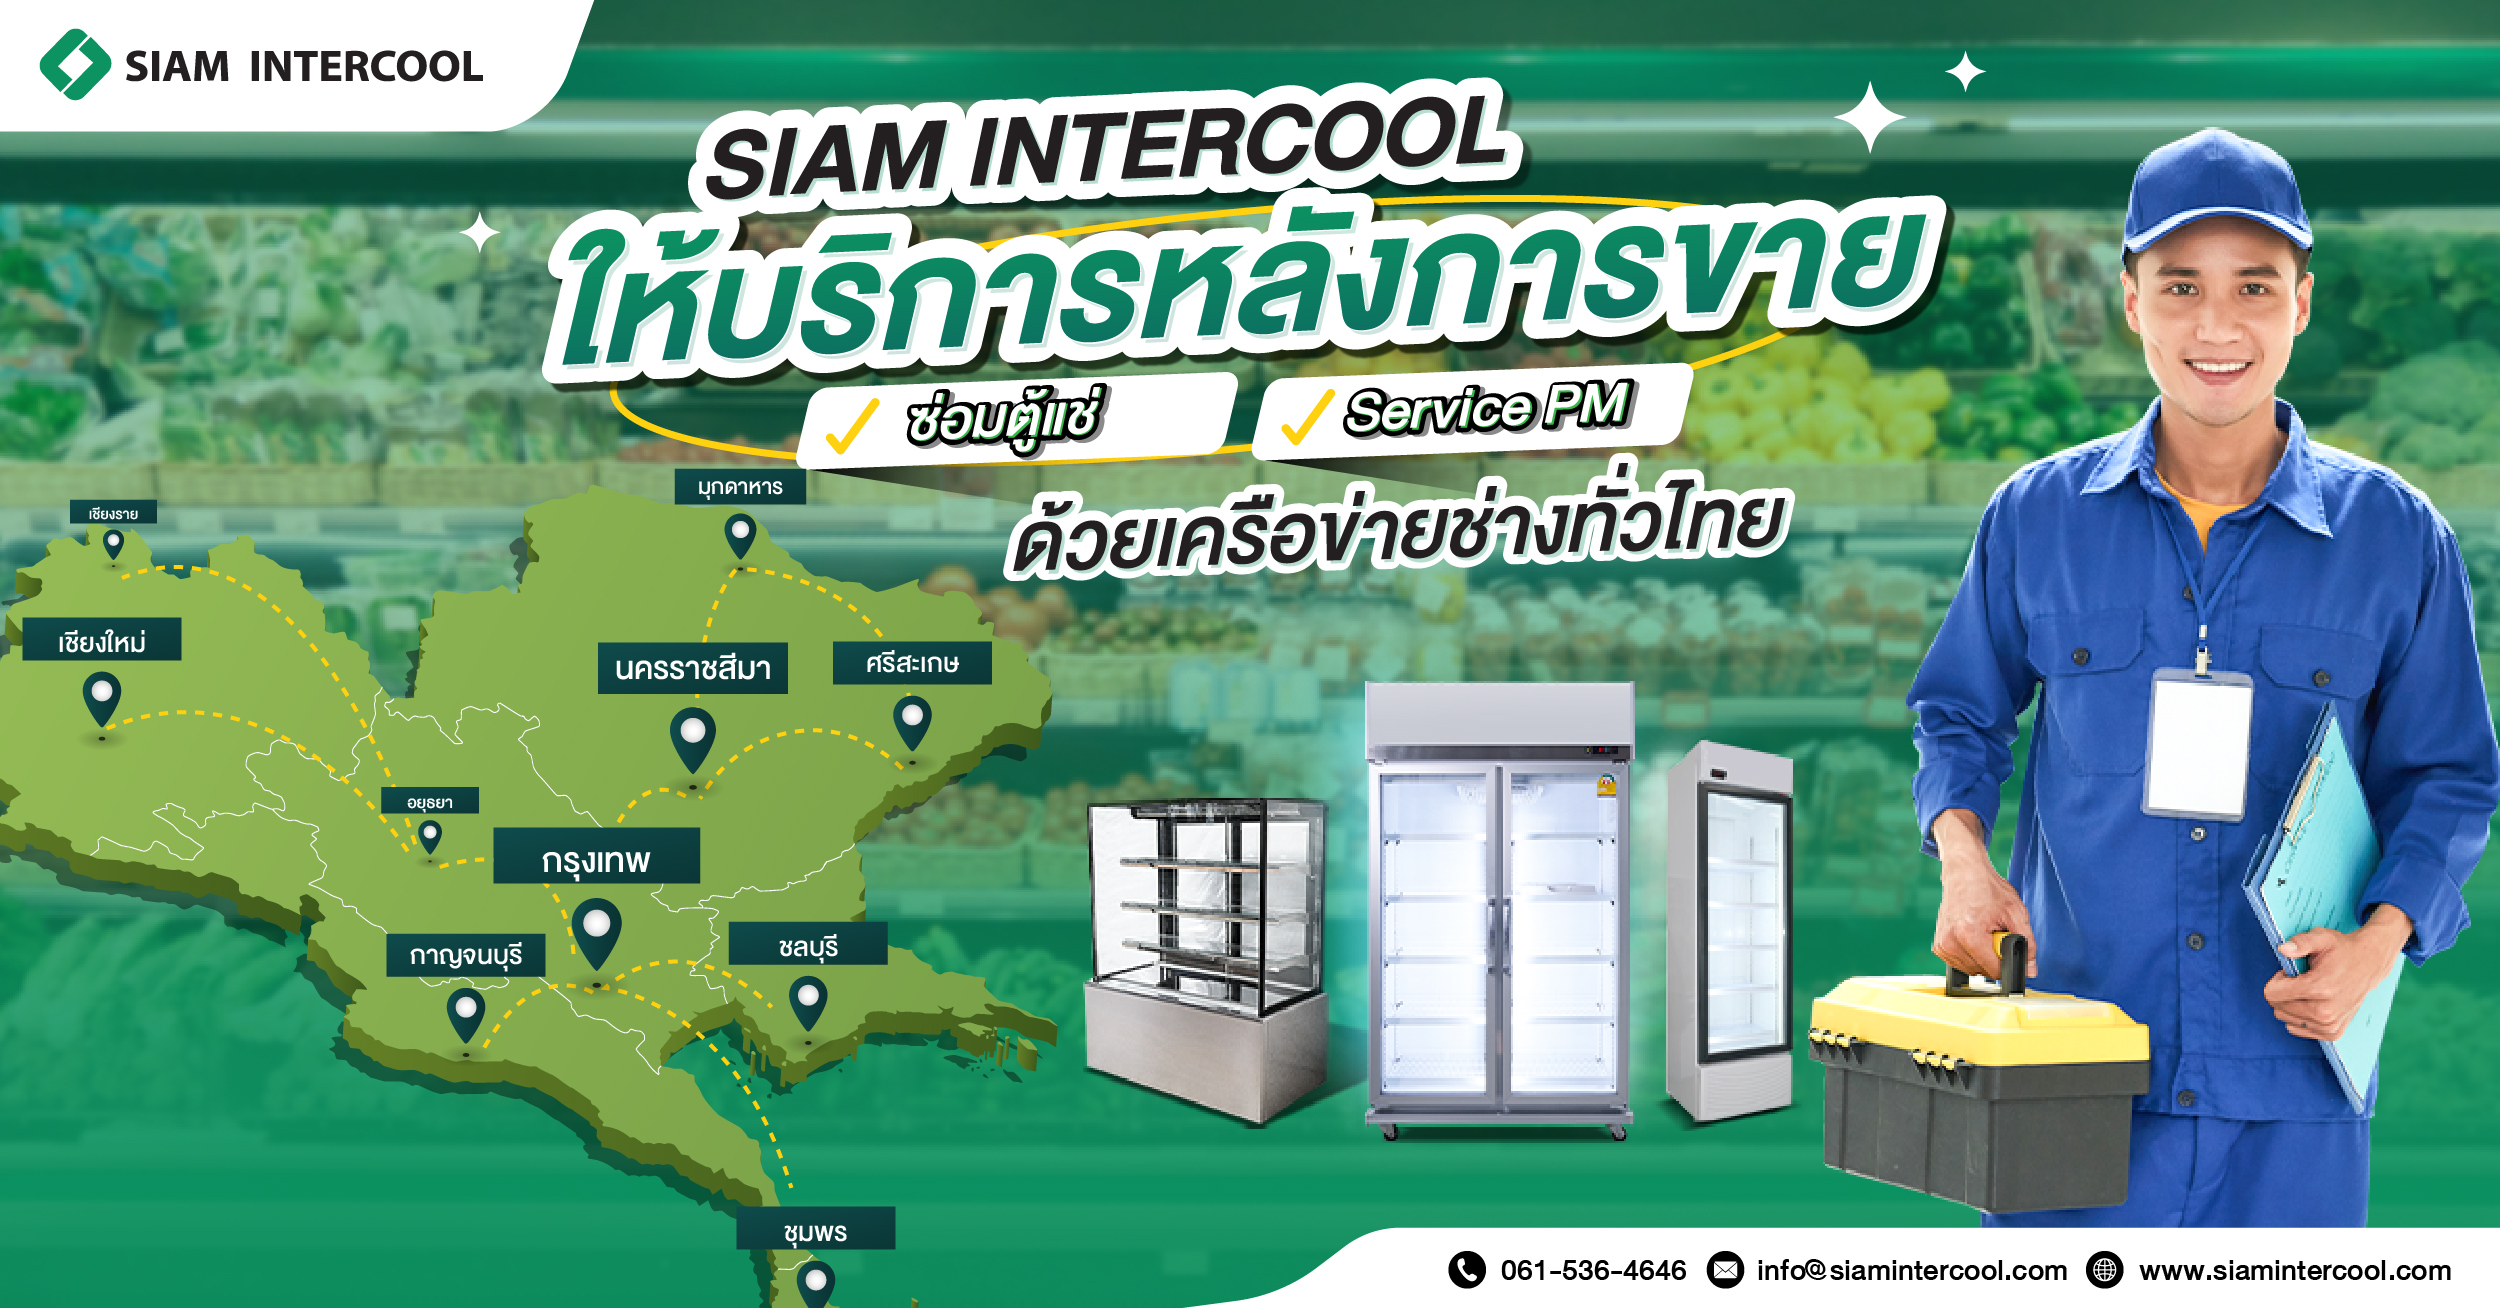 SIAM INTERCOOL ให้บริการหลังการขาย ซ่อมตู้แช่และ Service PM ด้วยเครือข่ายช่างทั่วไทย